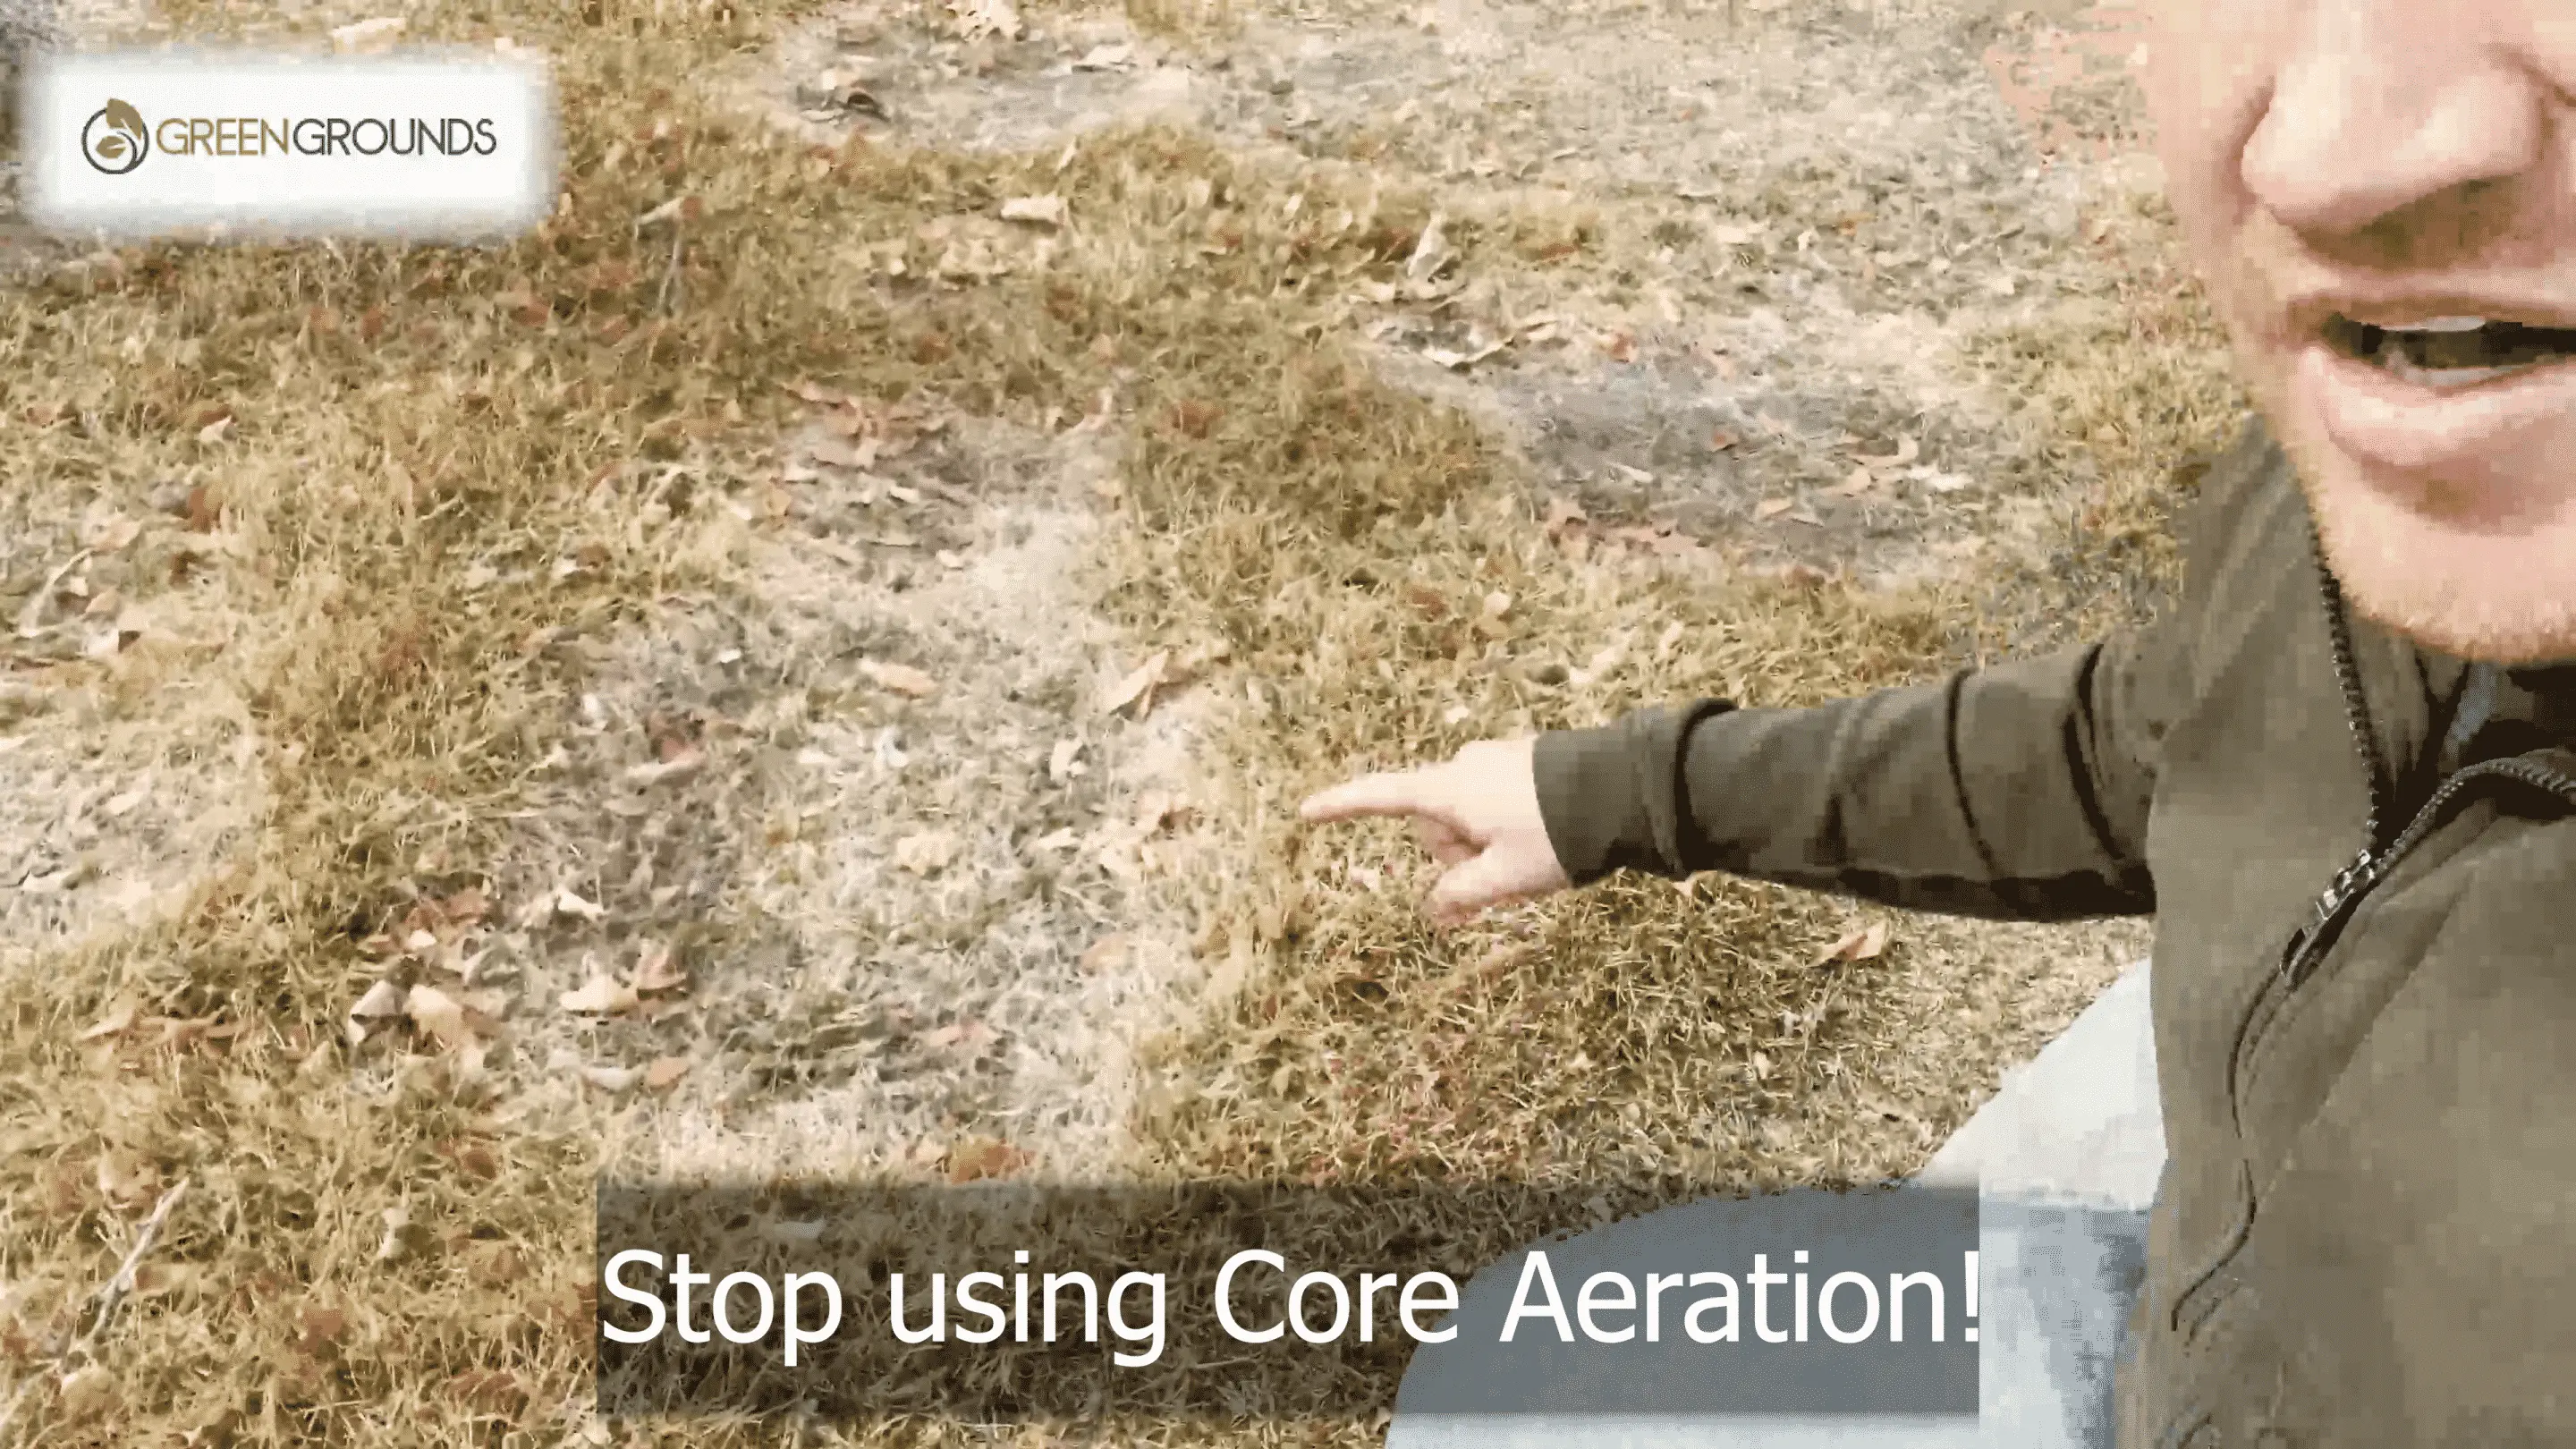 A superior alternative to core aeration